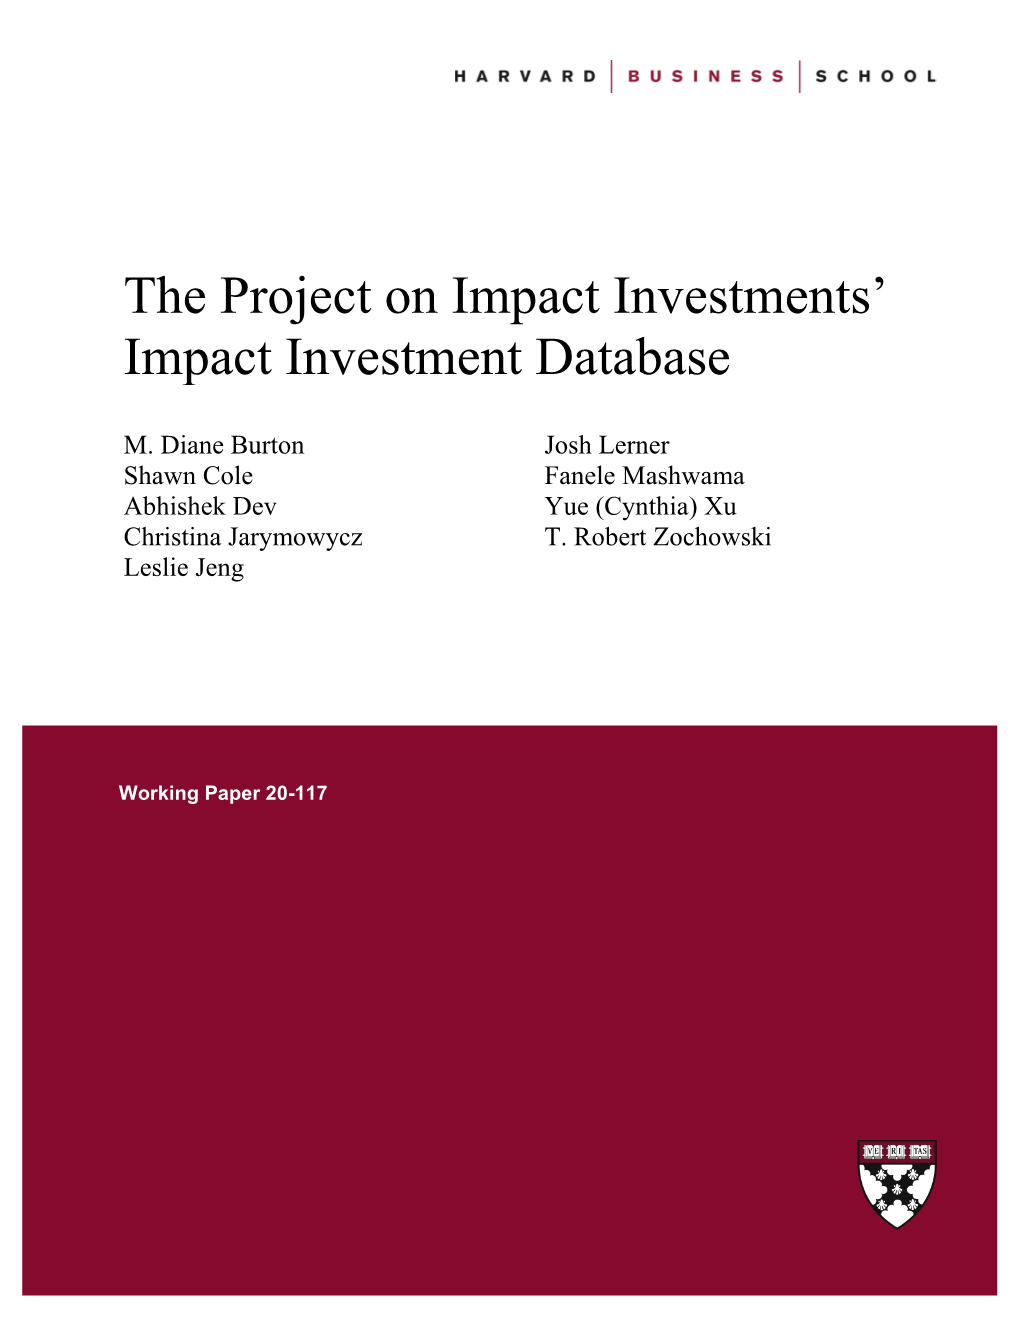 Impact Investing Database.Pdf